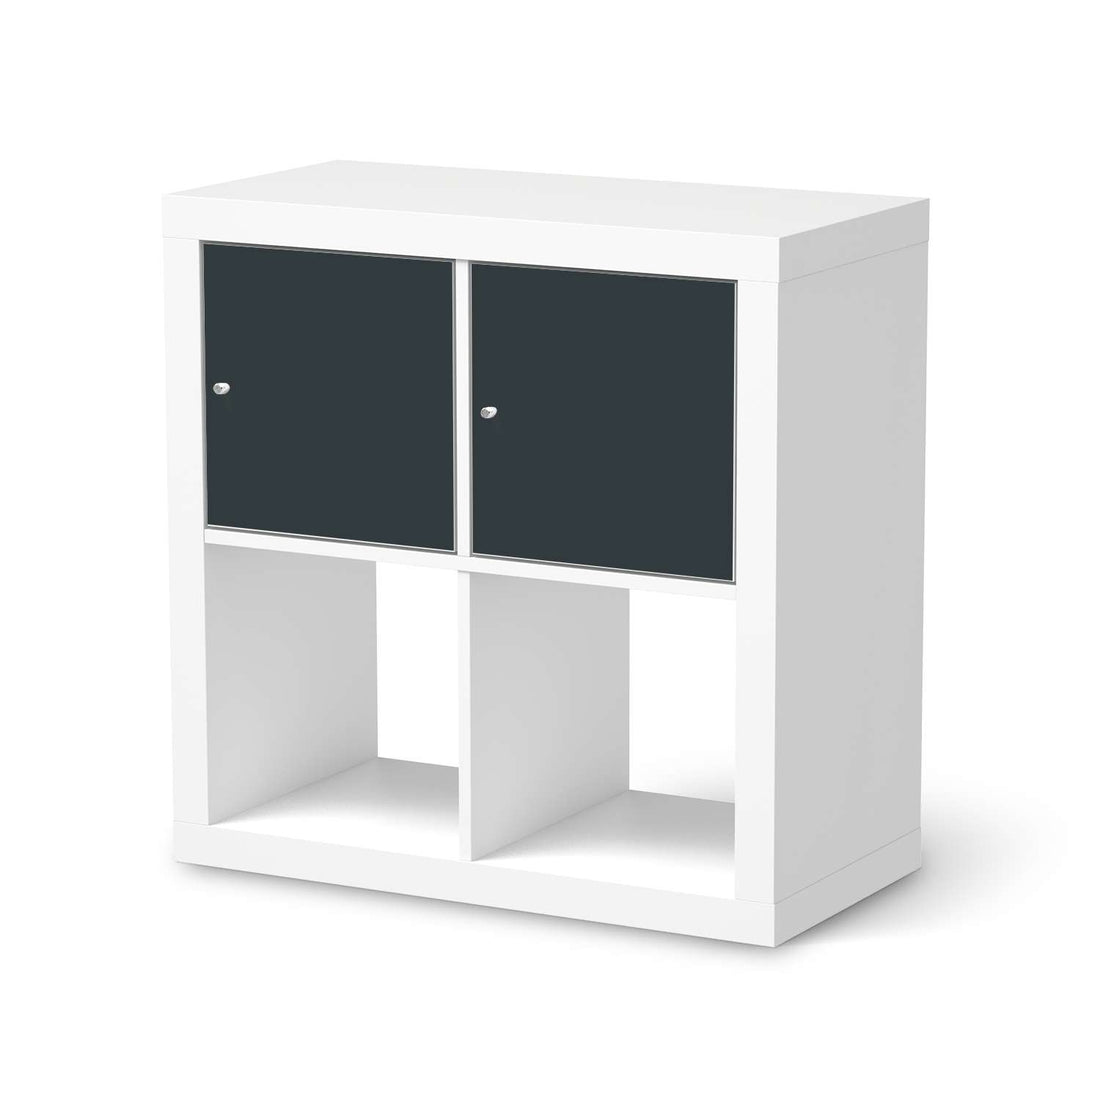 Möbel Klebefolie Blaugrau Dark - IKEA Expedit Regal 2 Türen Quer  - weiss